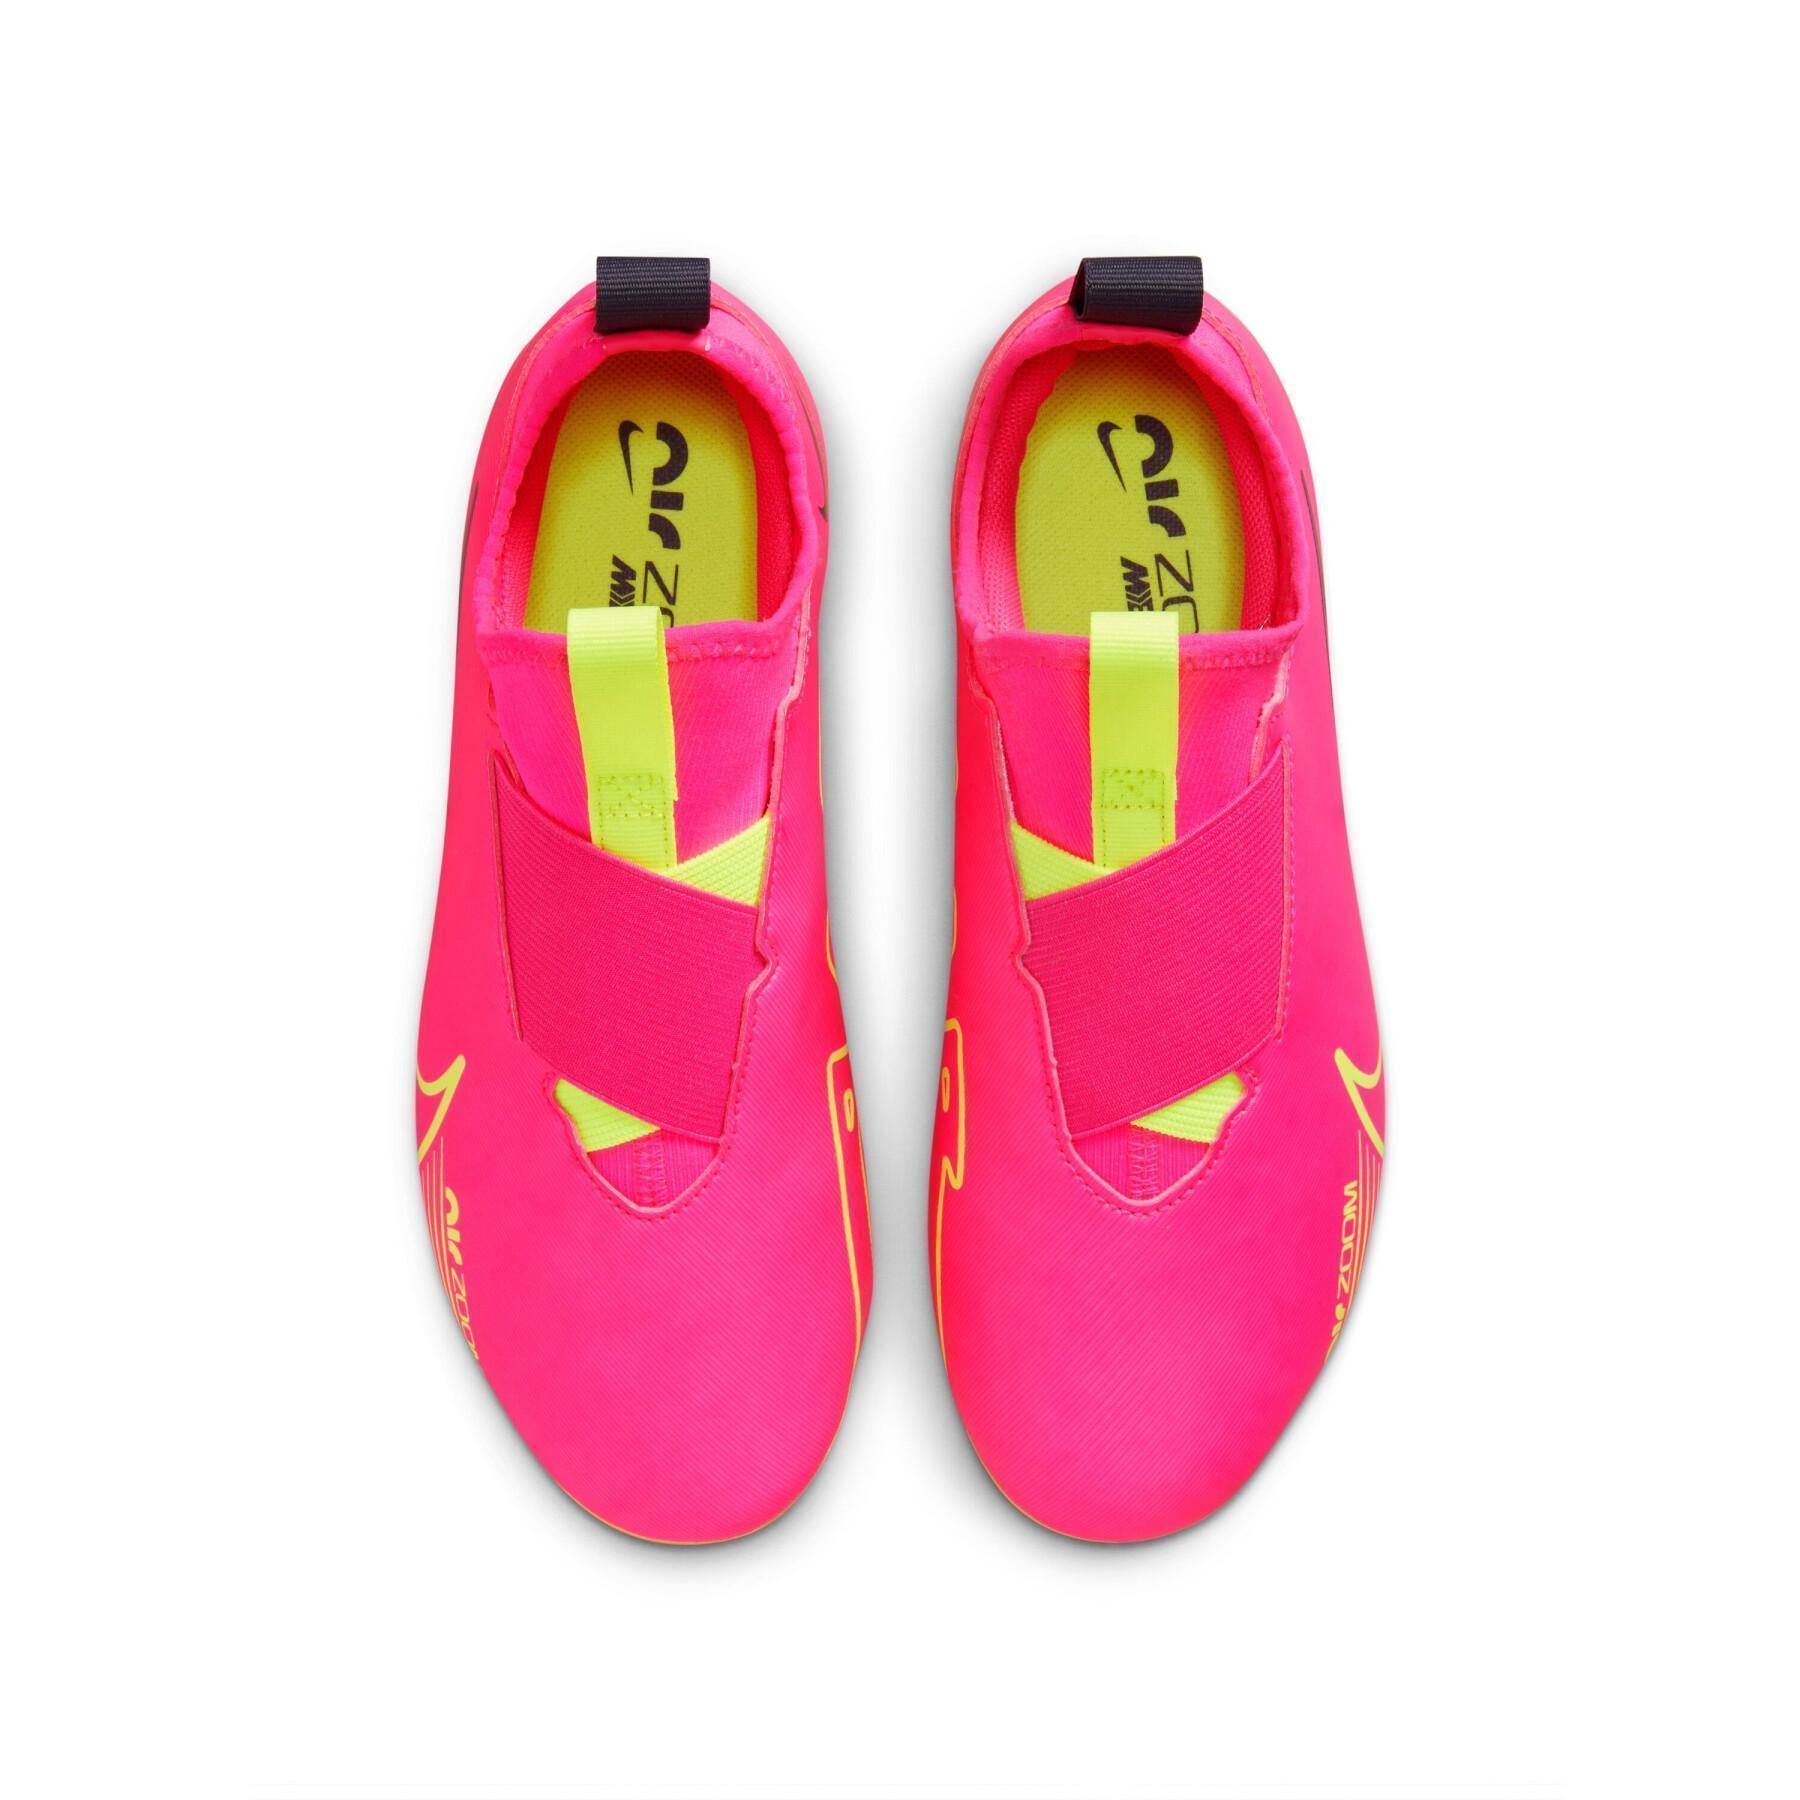 Children's soccer shoes Nike Zoom Mercurial Vapor 15 Academy MG - Luminious Pack